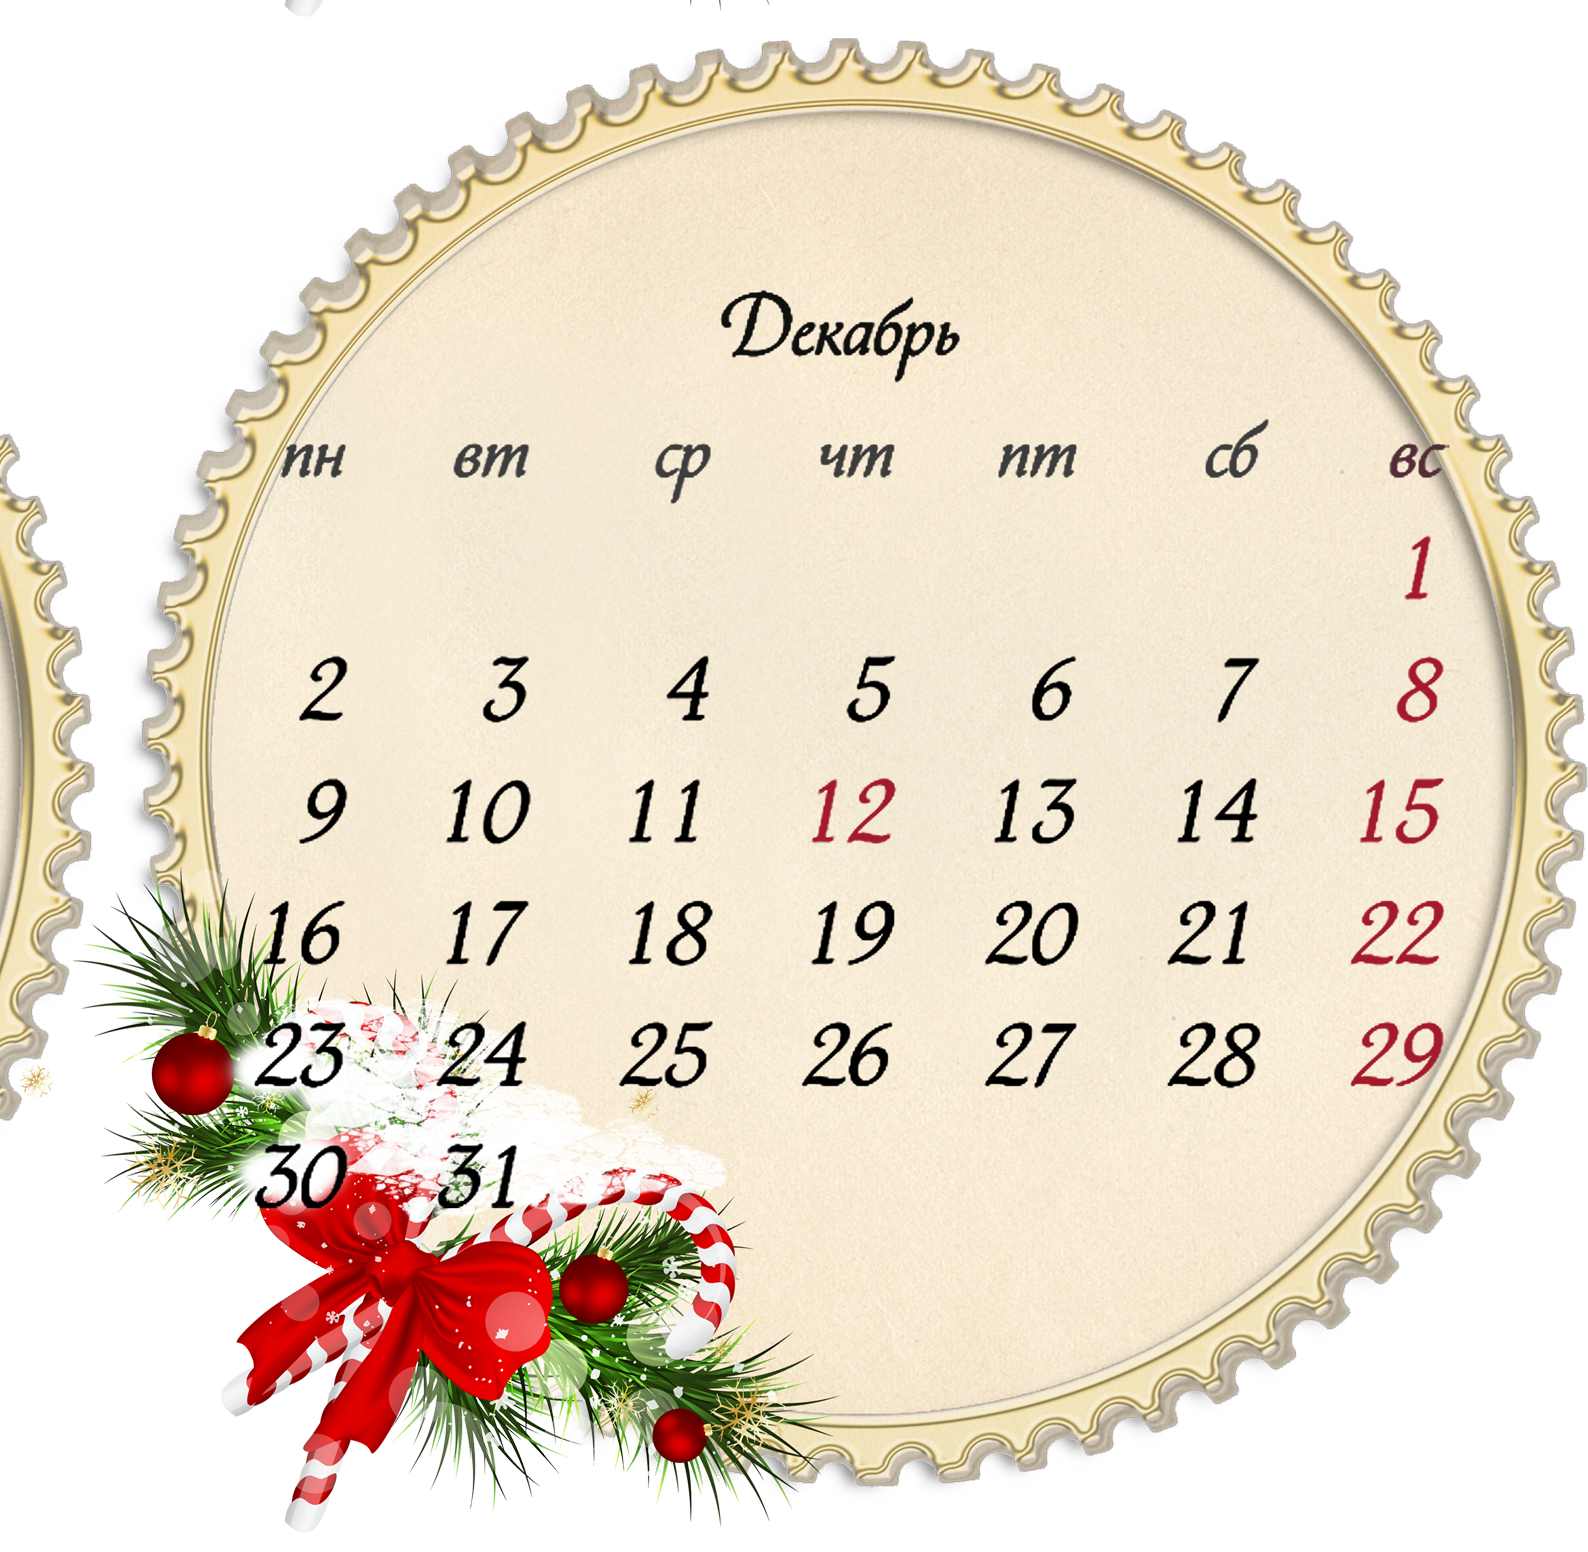 10 календарных лет в дни. Календарь 2014. 2014 Календарь по месяцам. Сентябрь 2014 календарь. Декабрь 2013 календарь.